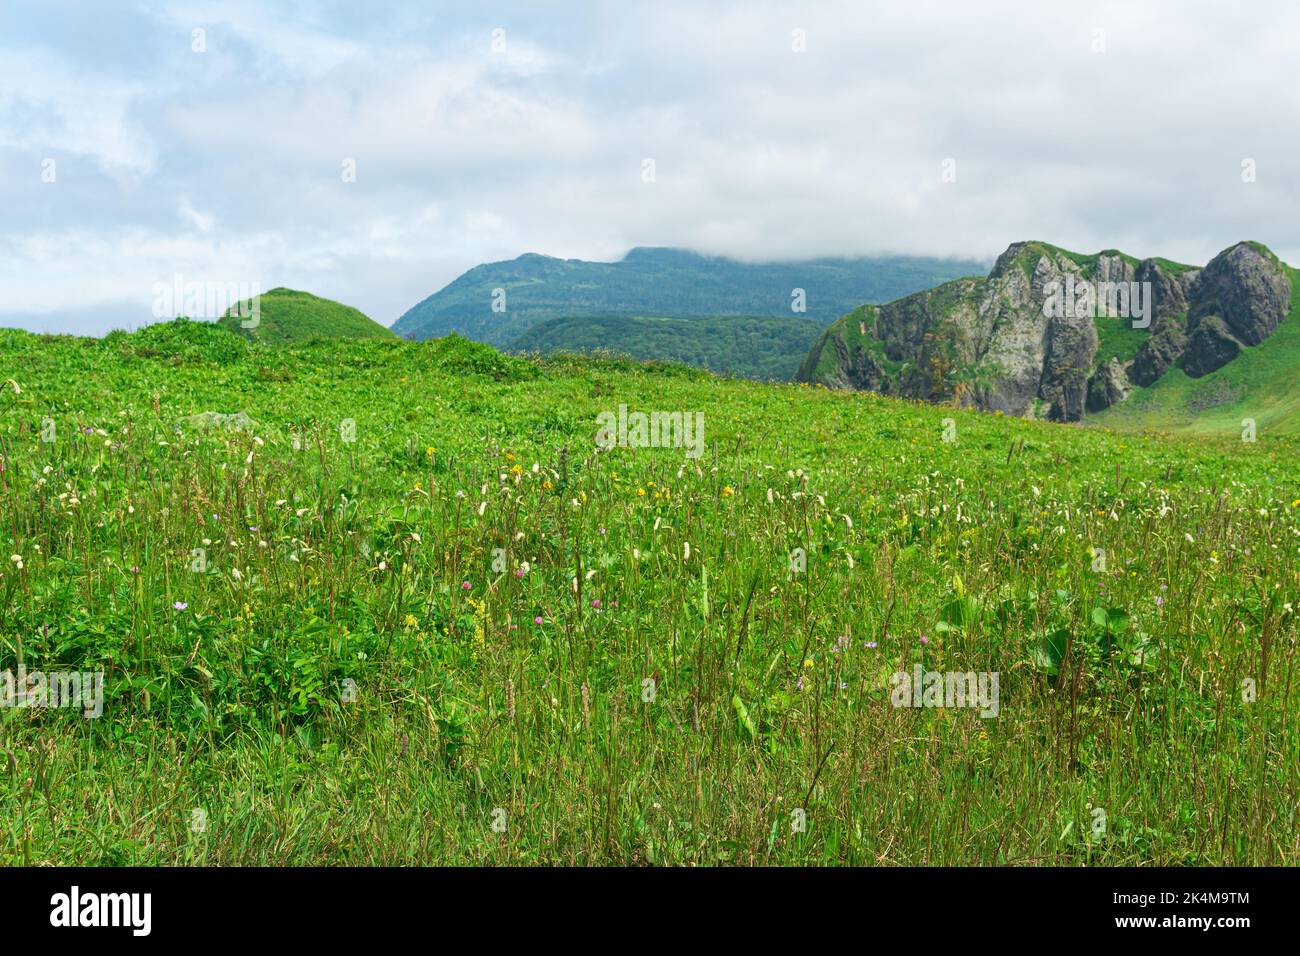 beautiful landscape of Kunashir island with grassy hills and basalt rocks, focus on near forbs Stock Photo